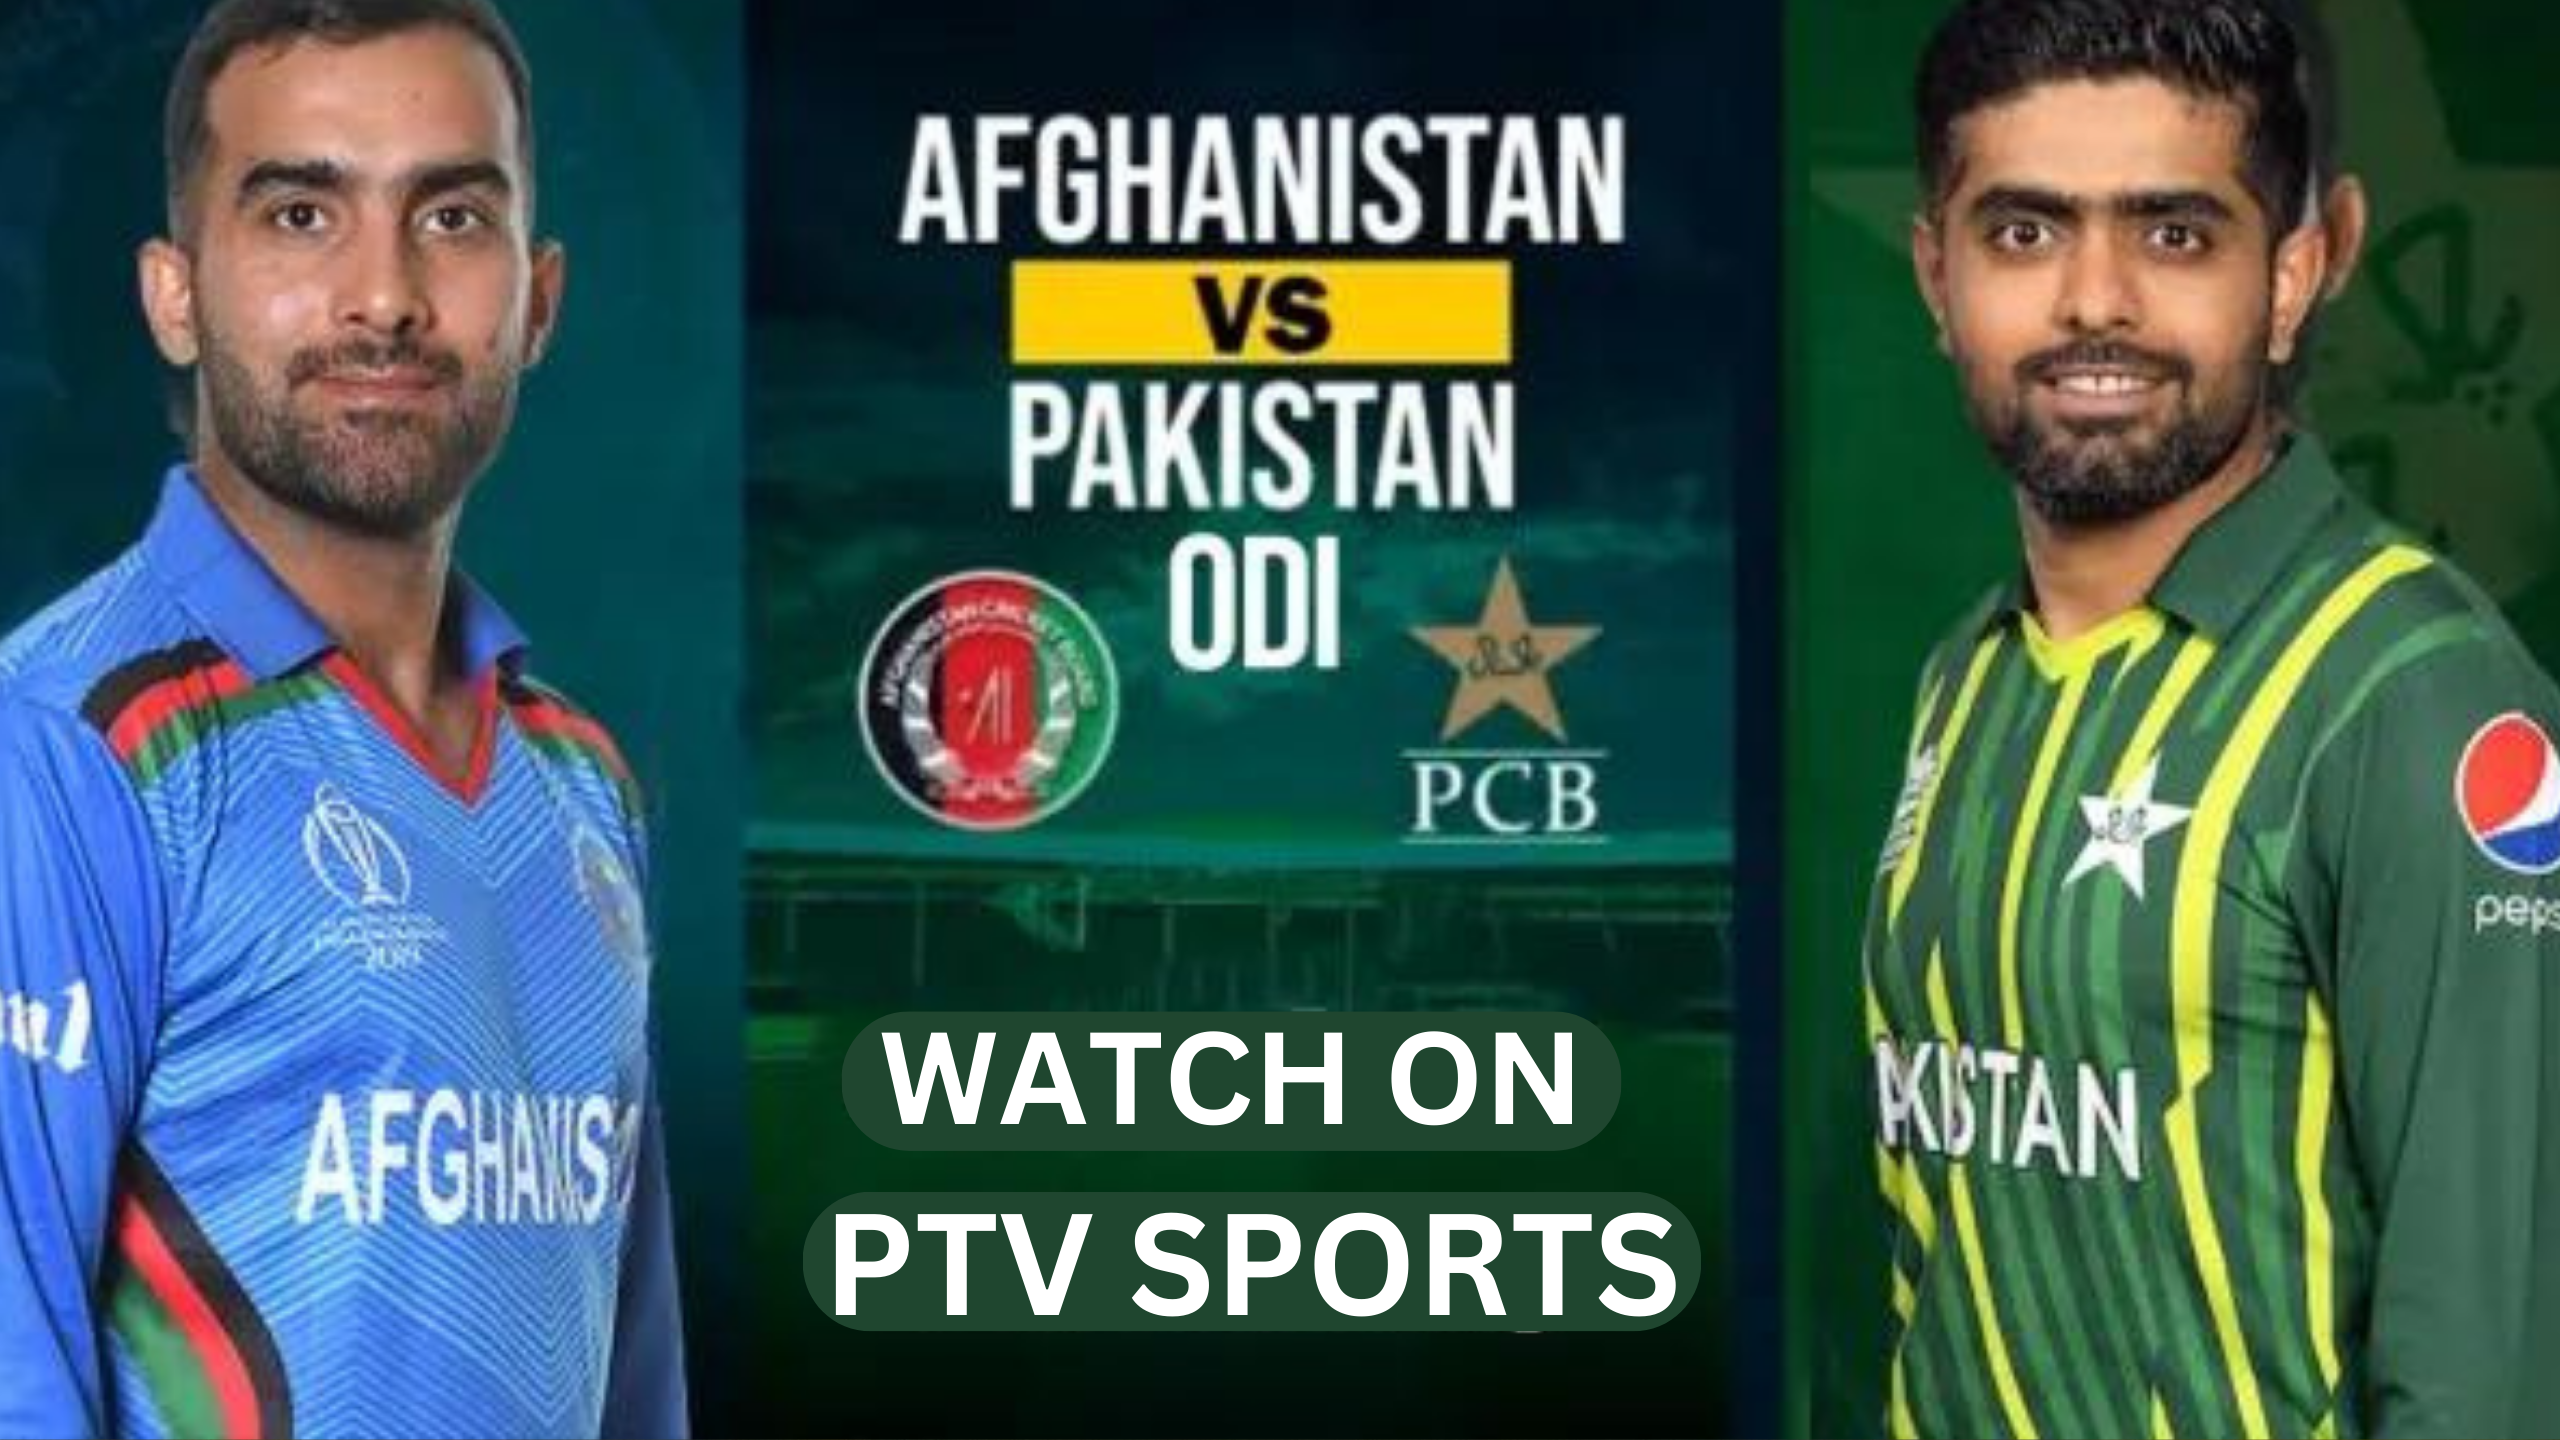 Afghanistan vs Pakistan 1st ODI, Watch Live on Ptv Sports.